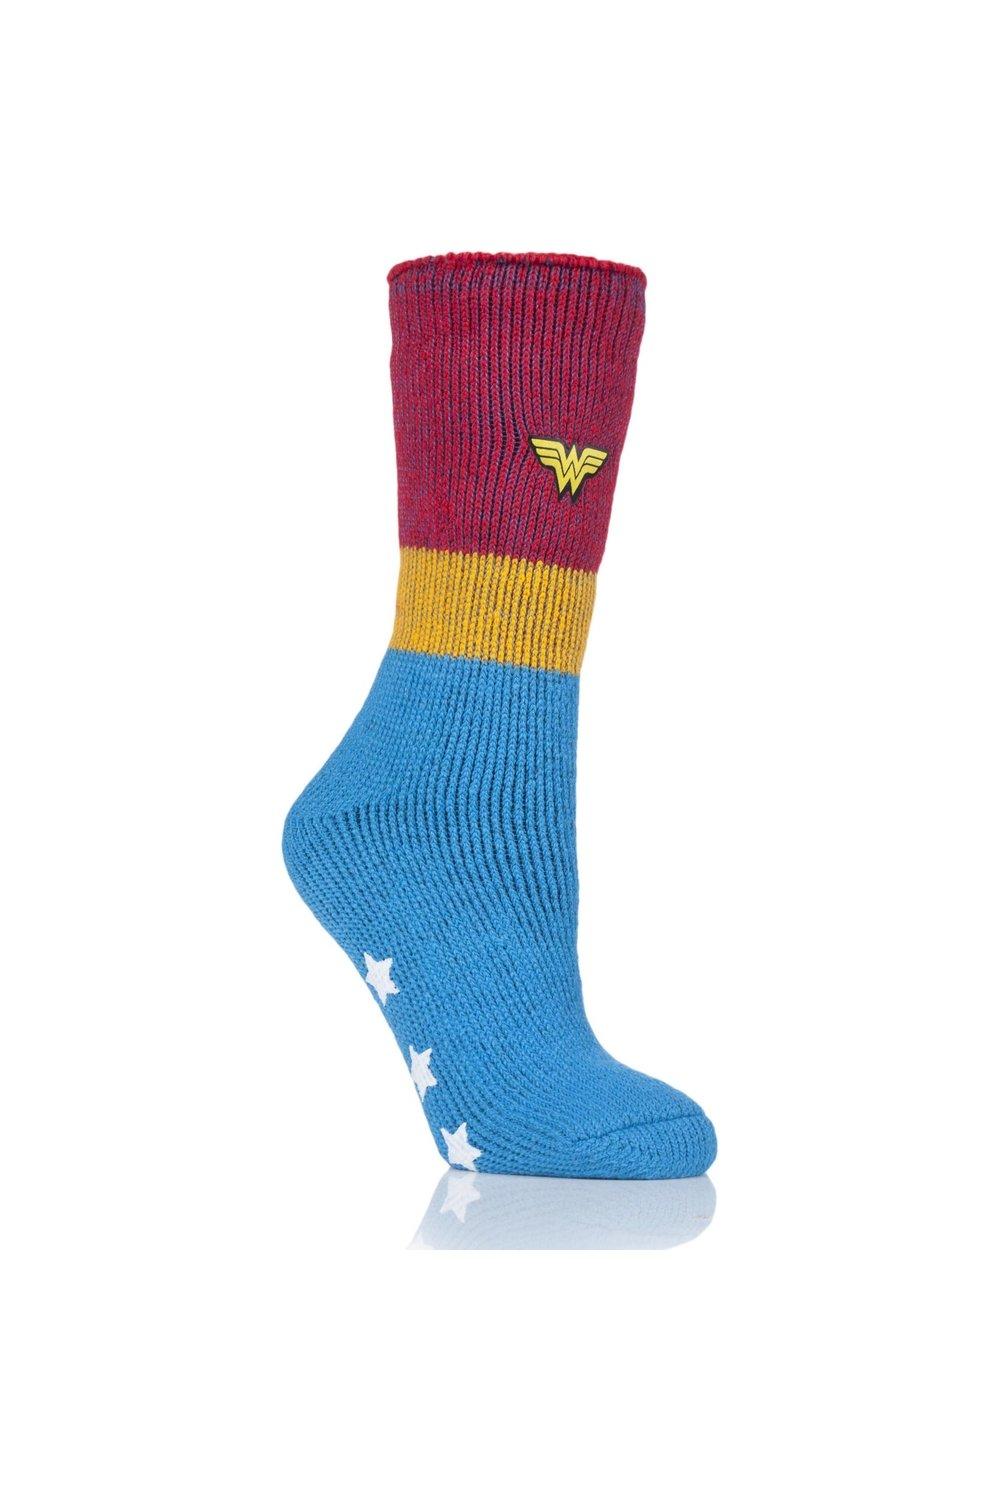 1 Pair DC's Wonder Woman Slipper Socks